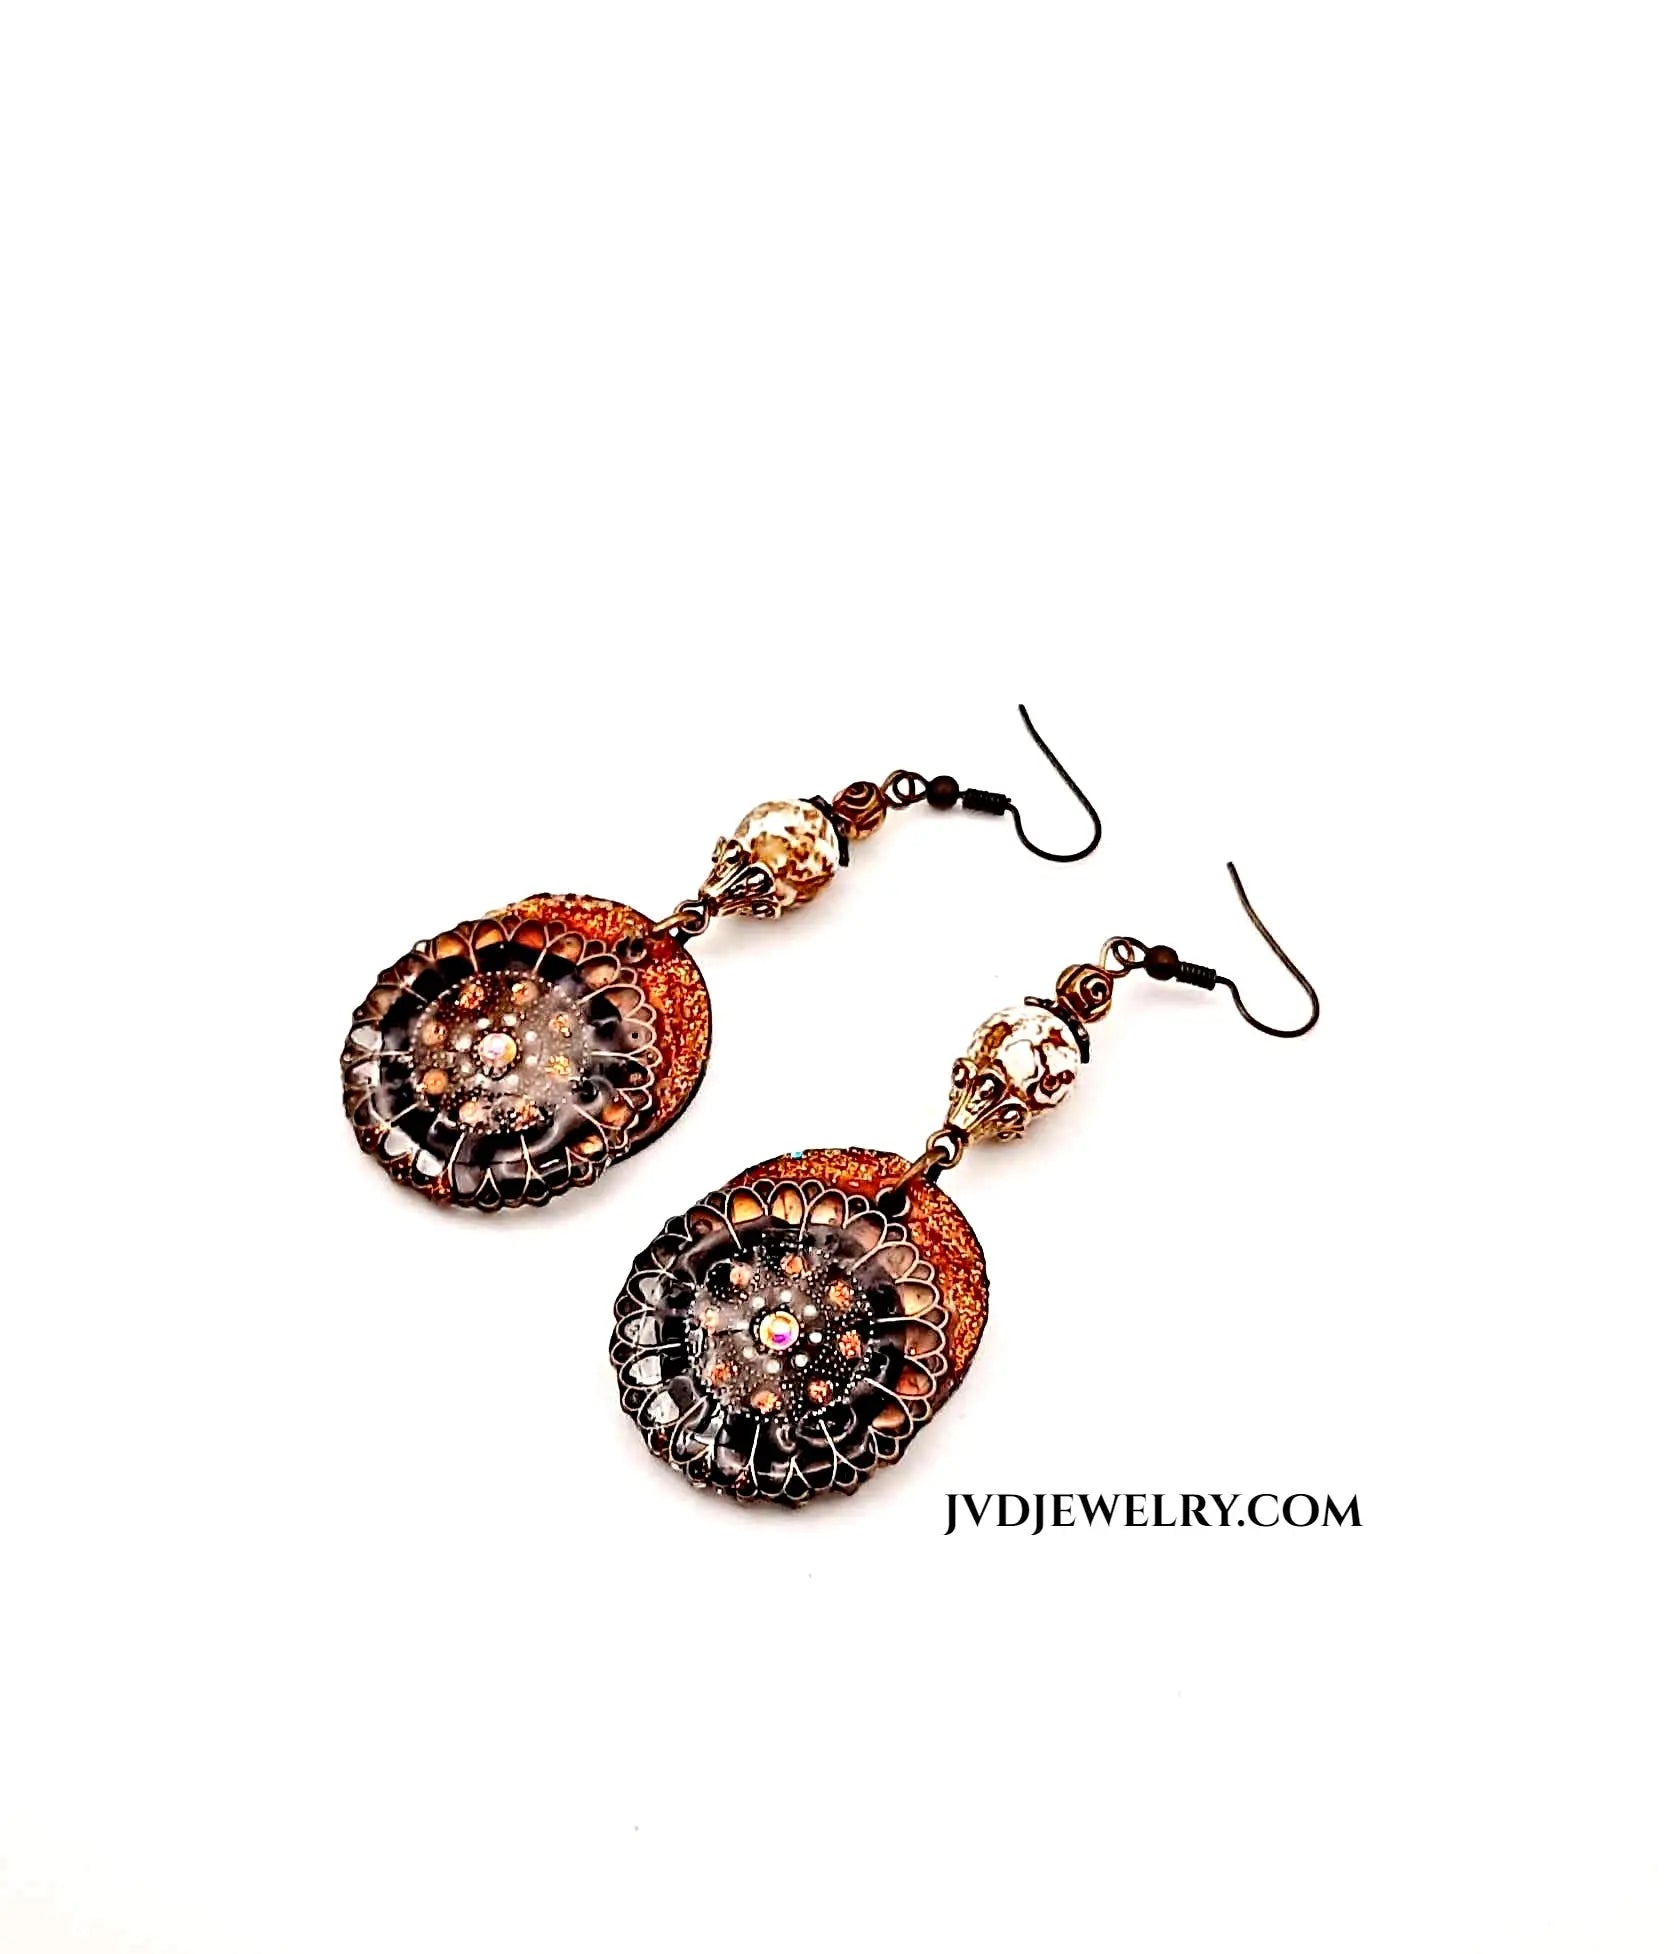 Boho handcrafted earrings with glass bead earrings - Image #1